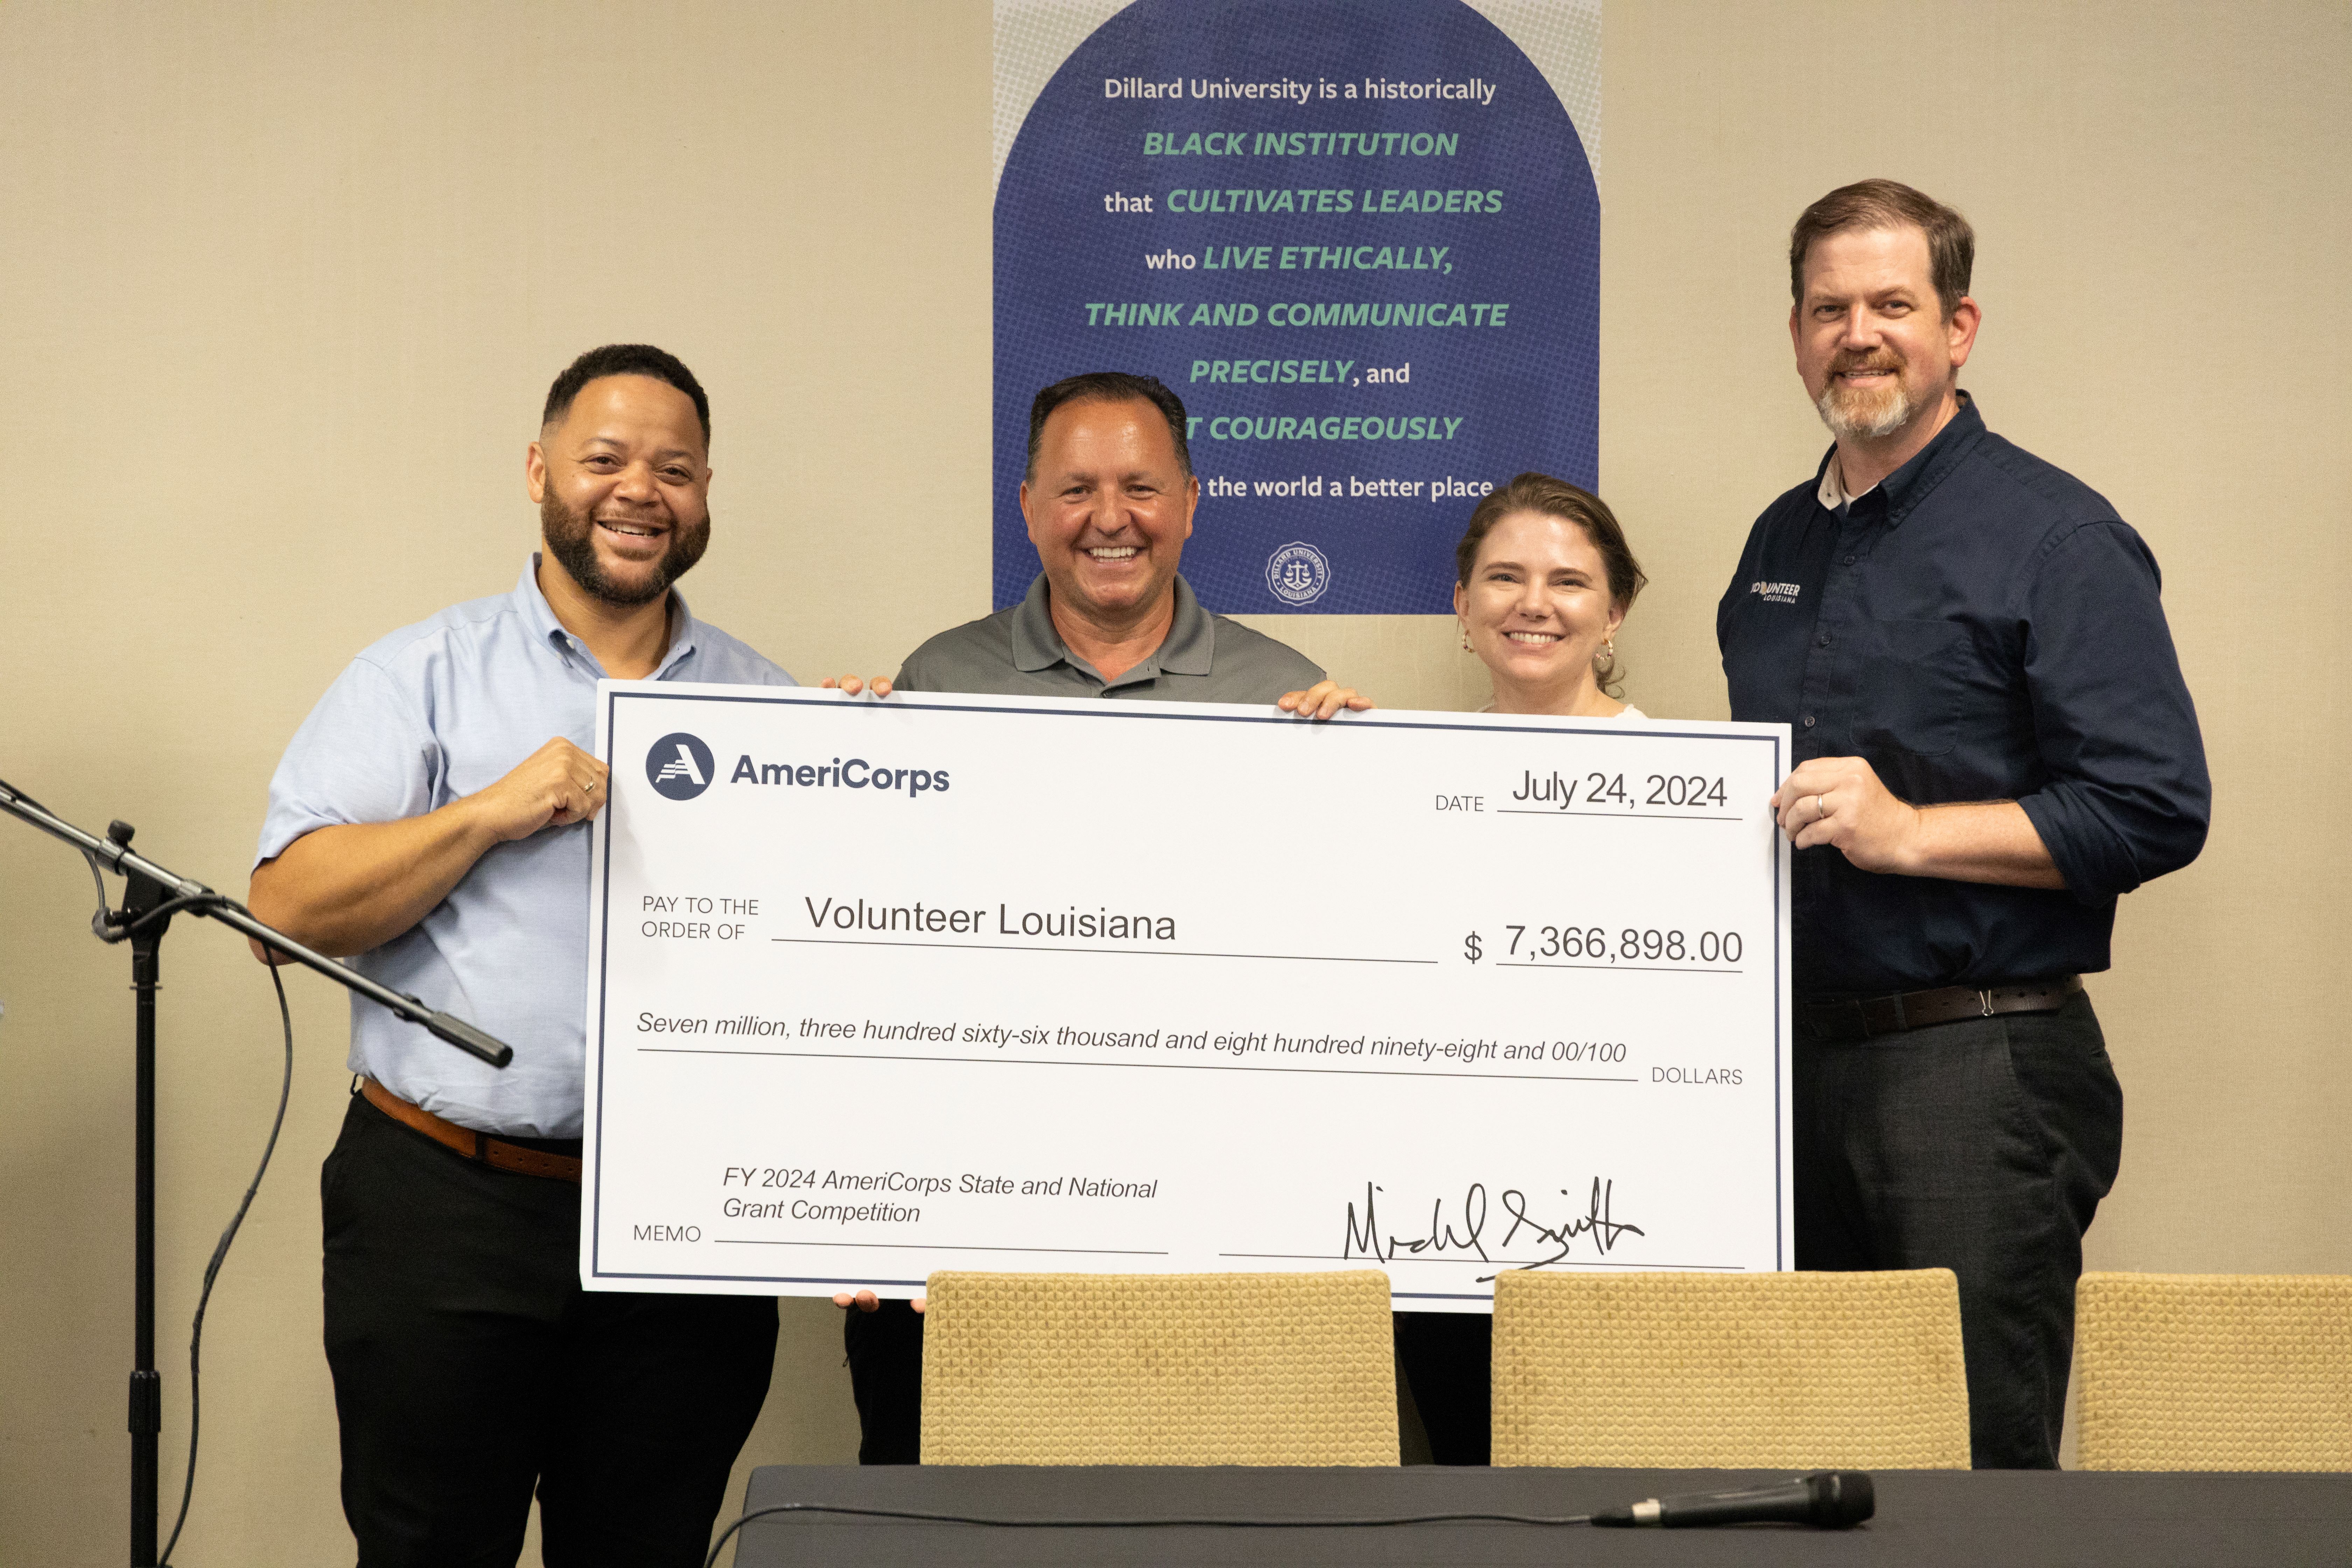 AmeriCorps presents check to Volunteer Louisiana